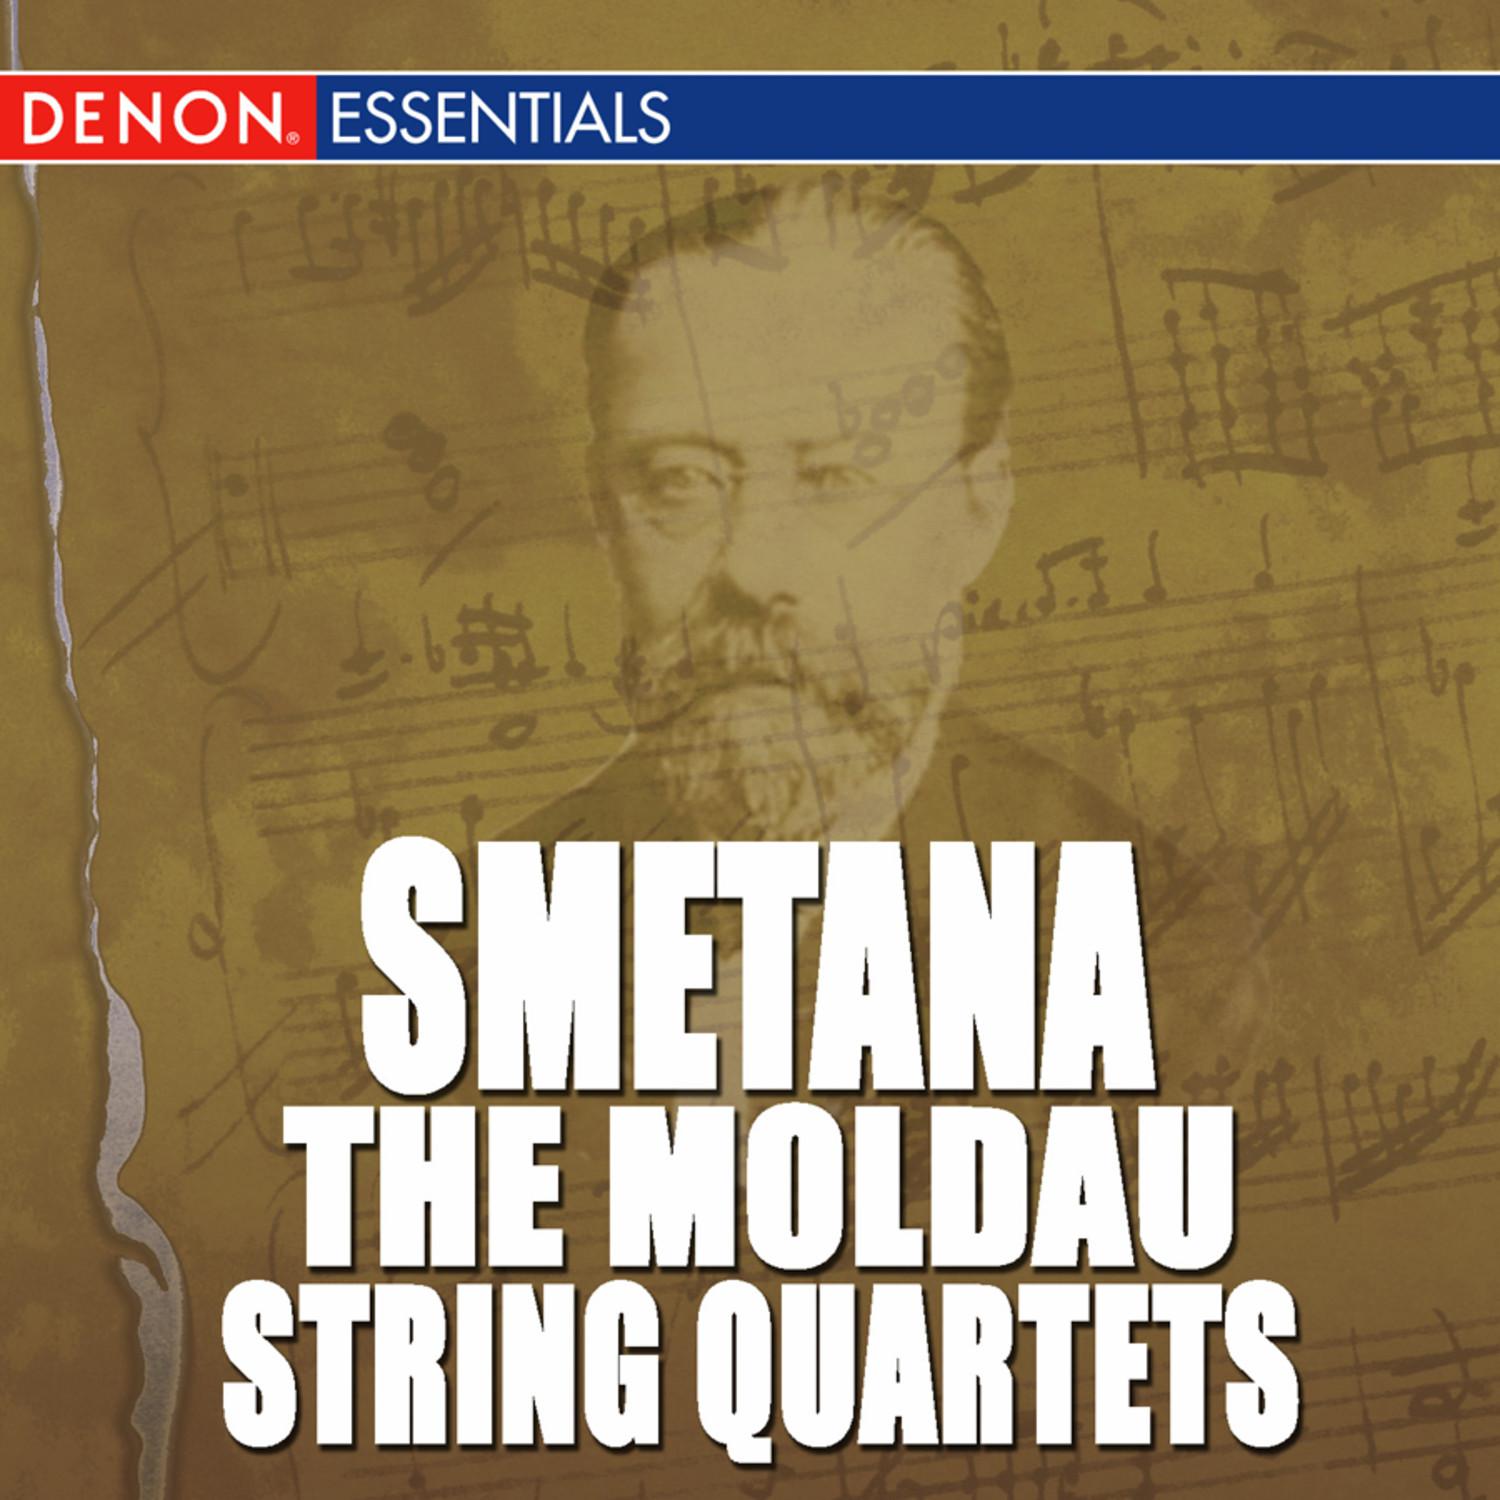 Quartet for Strings No. 2 in D Minor: IV. Finale - Presto